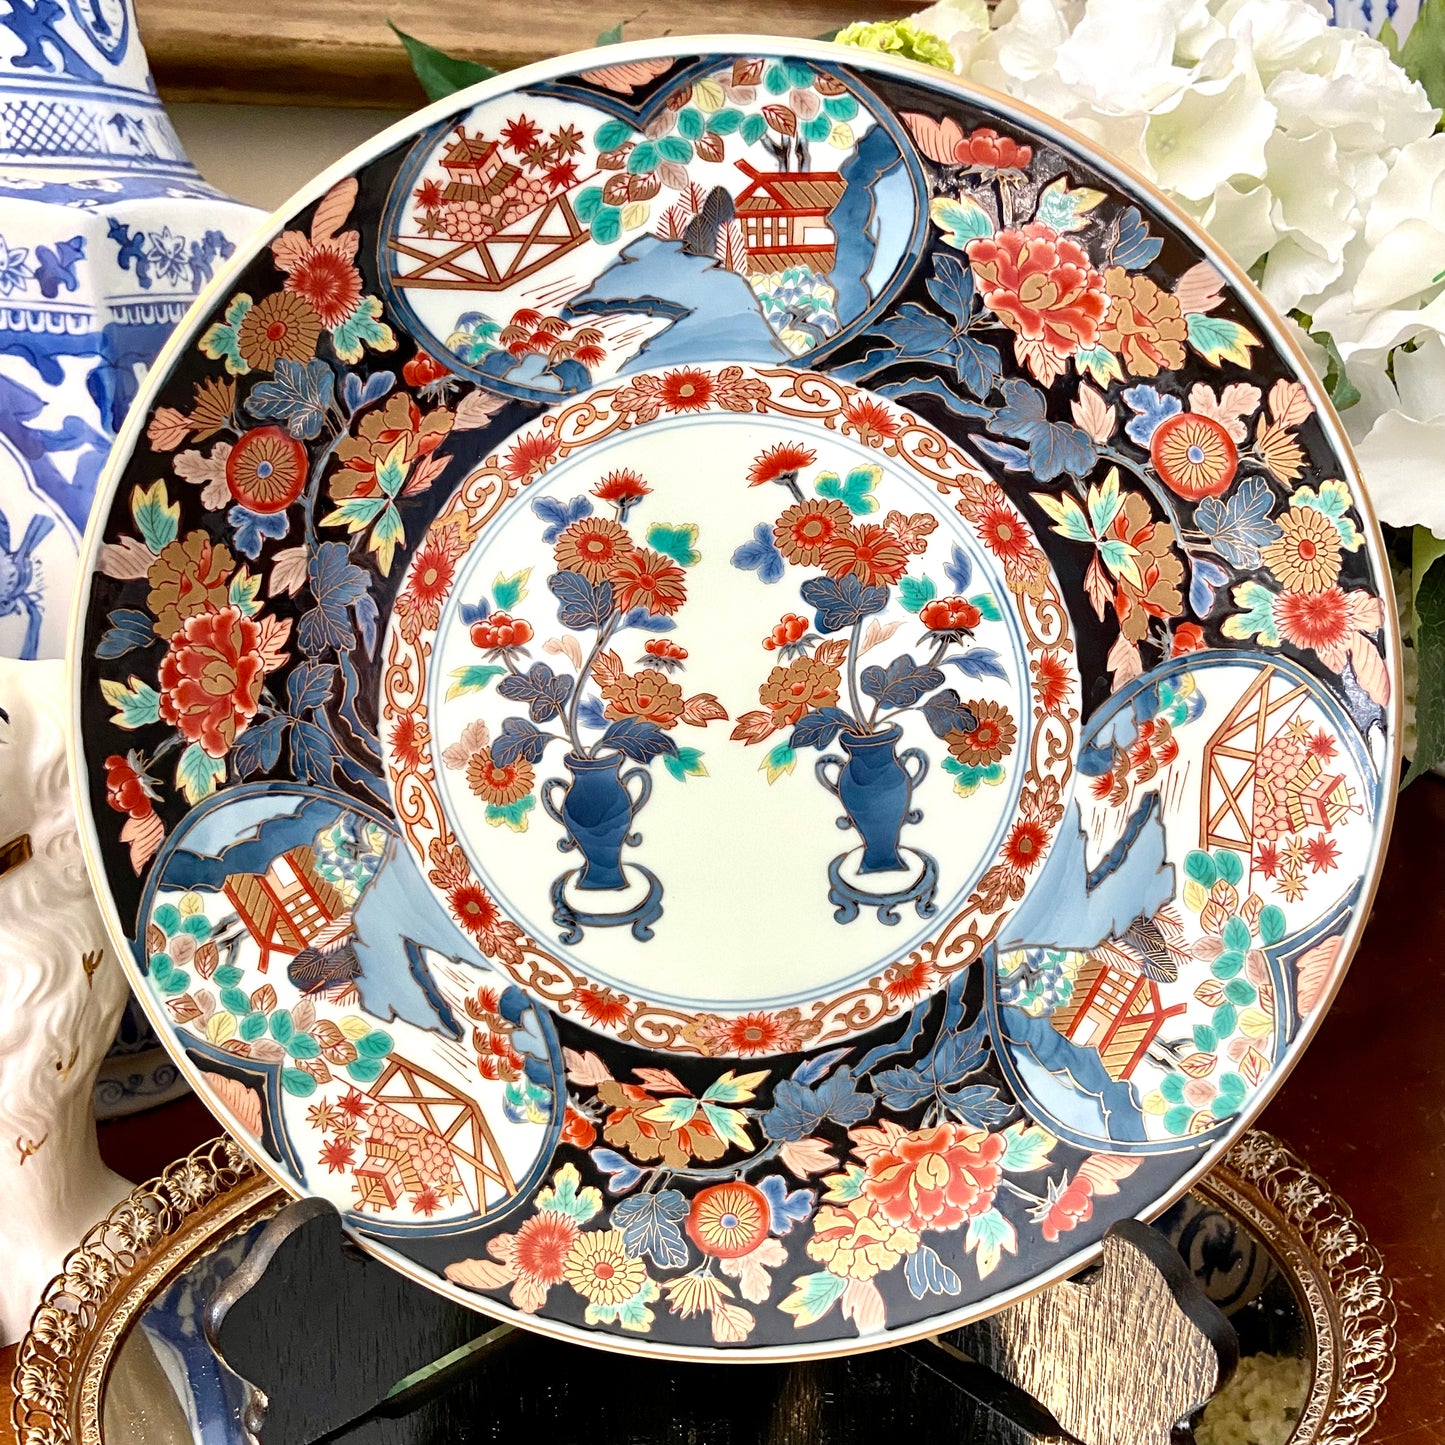 Stunning antique blue and white Imari style porcelain large platter